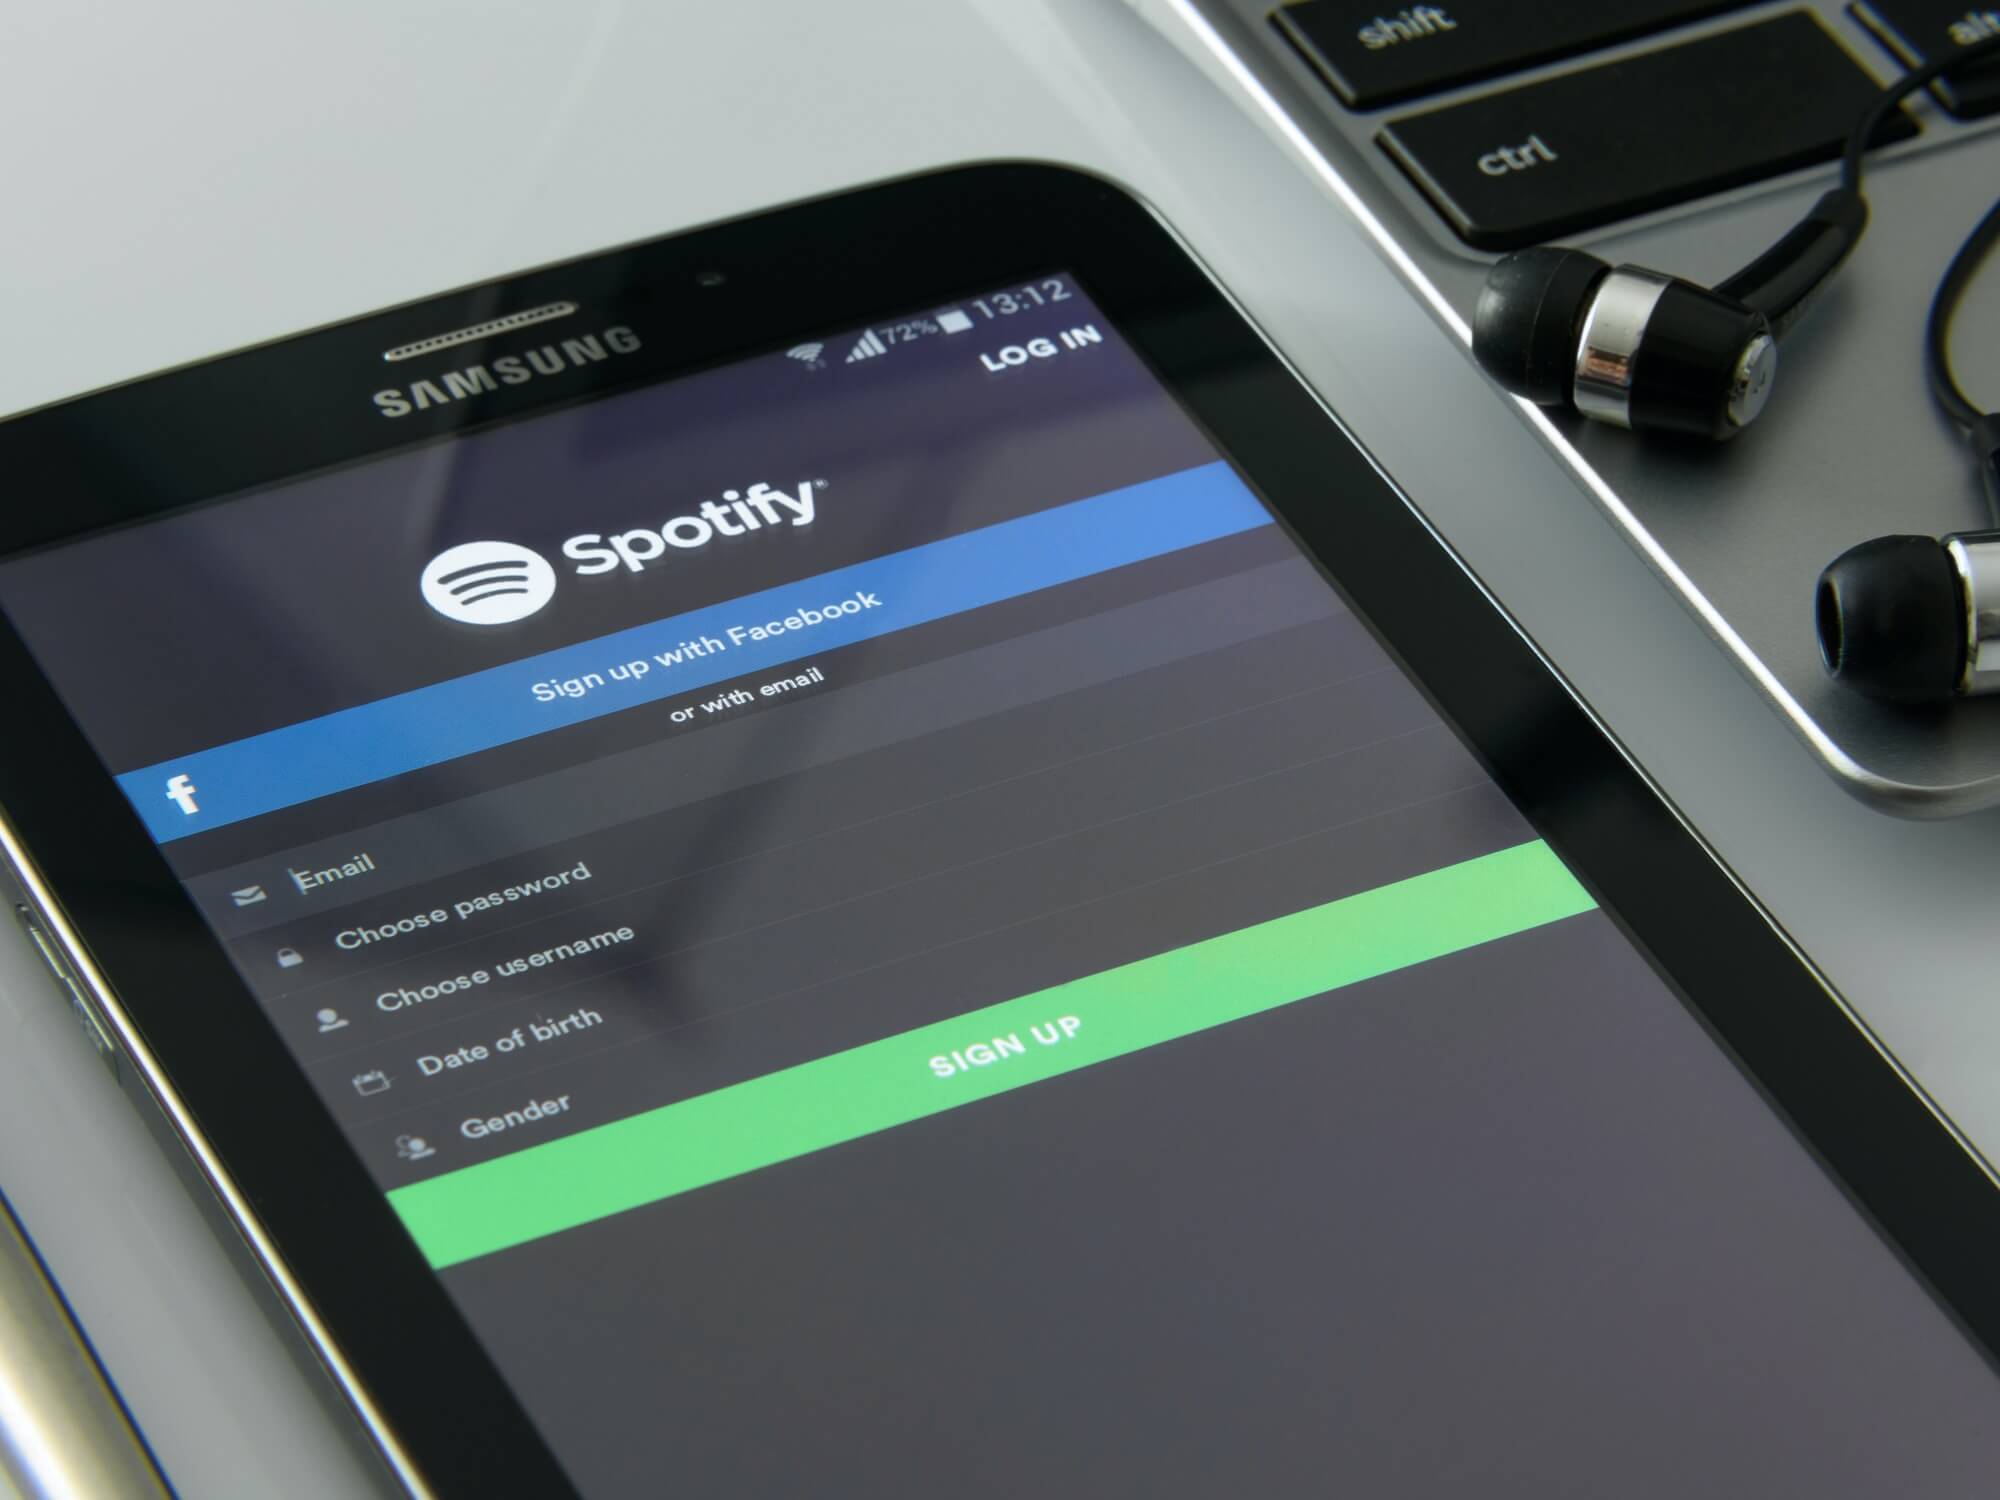 Spotify login page on tablet